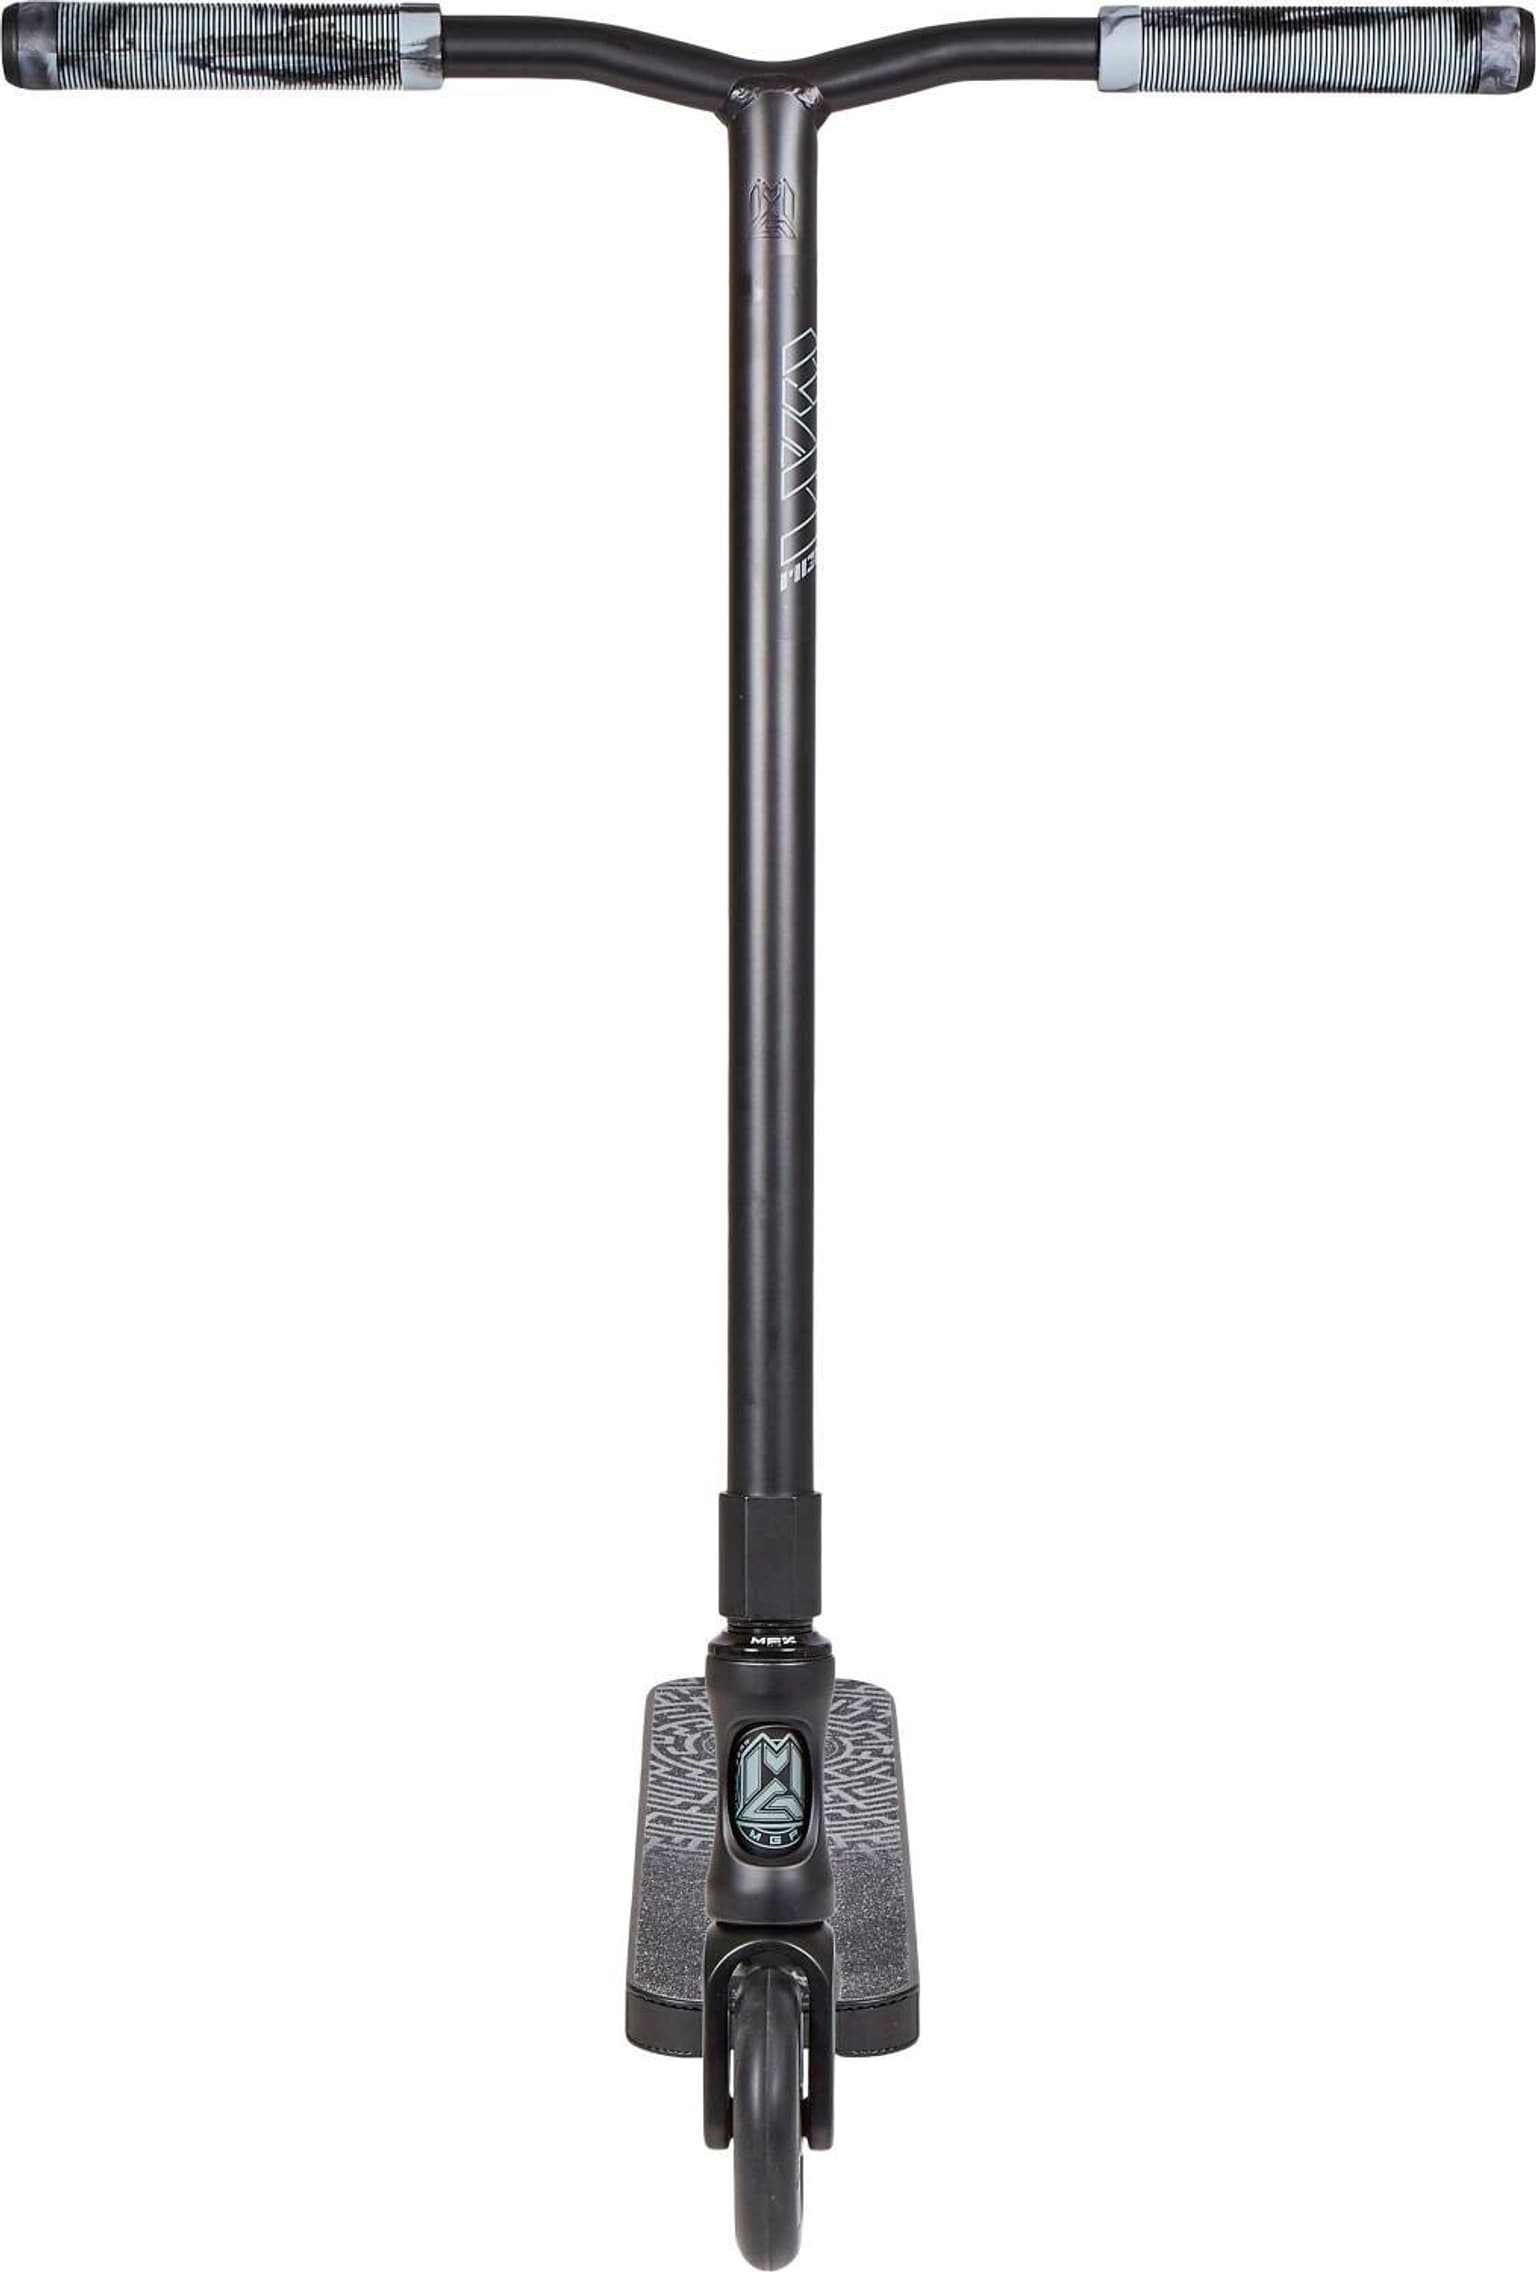 MGP MGP VX9 Pro Black Out Scooter 4